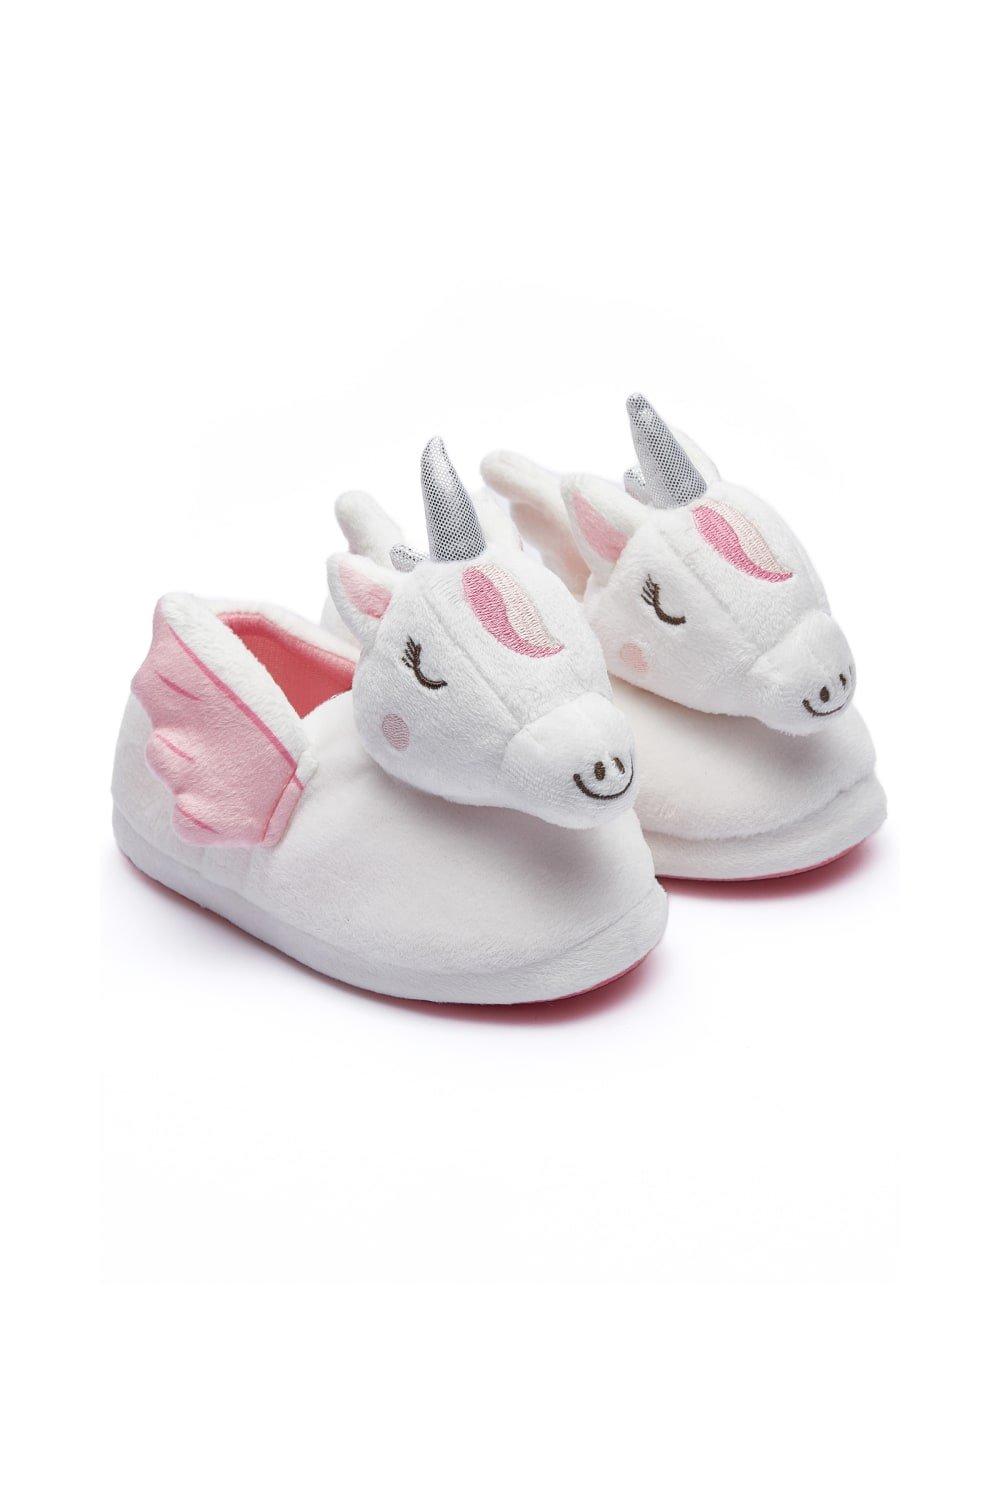 Unicorn Slippers